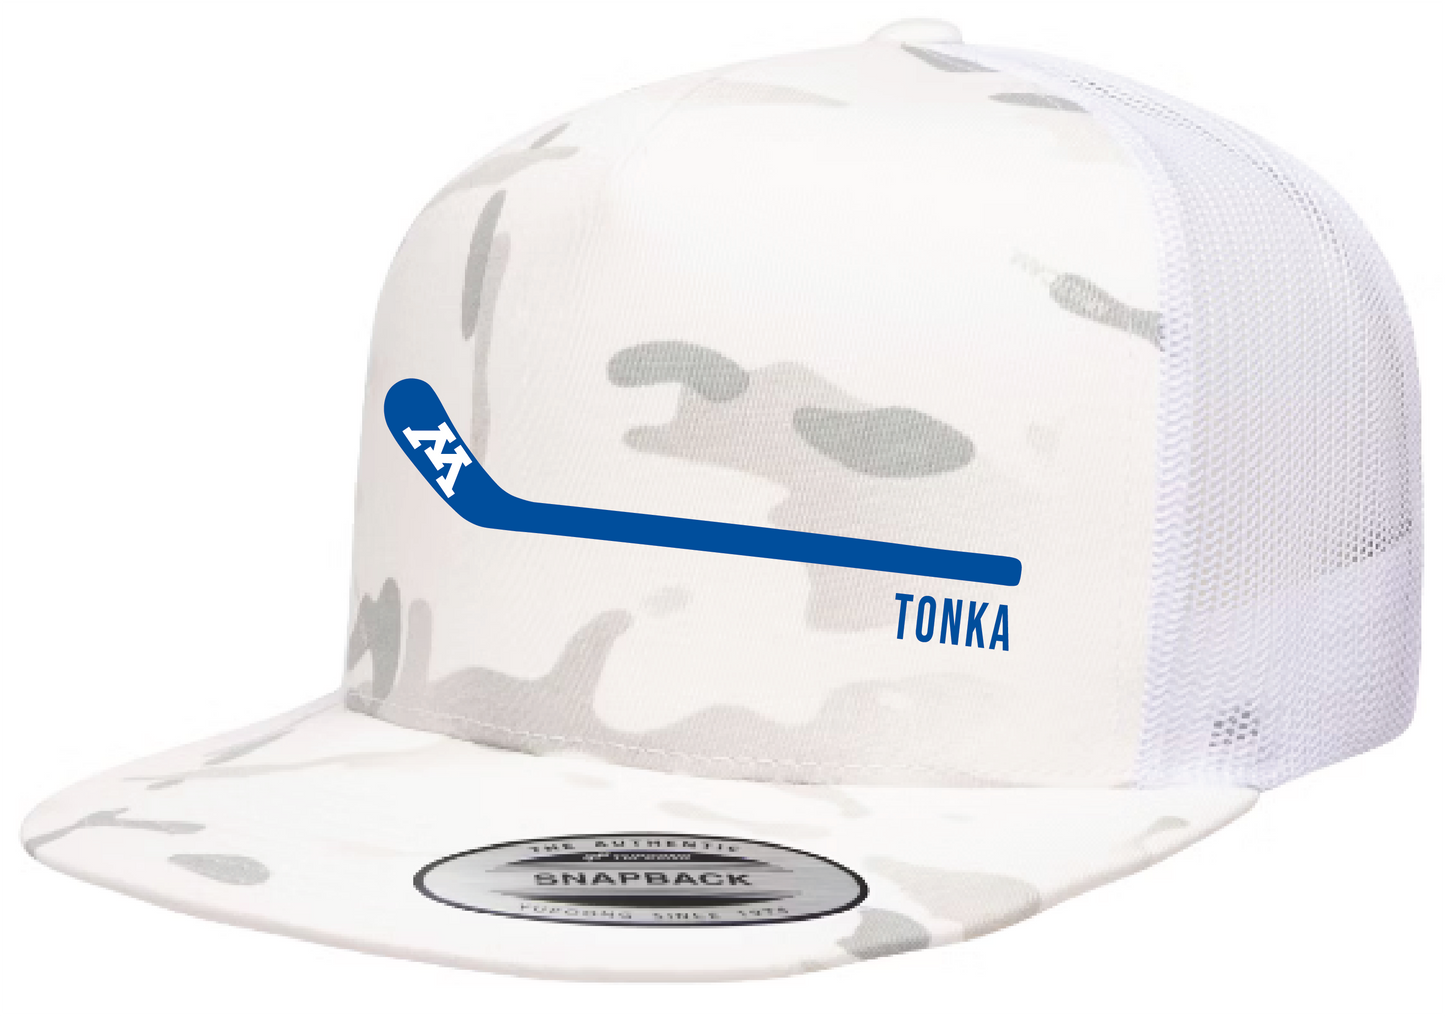 Tonka Hockey Stick White-Multicam